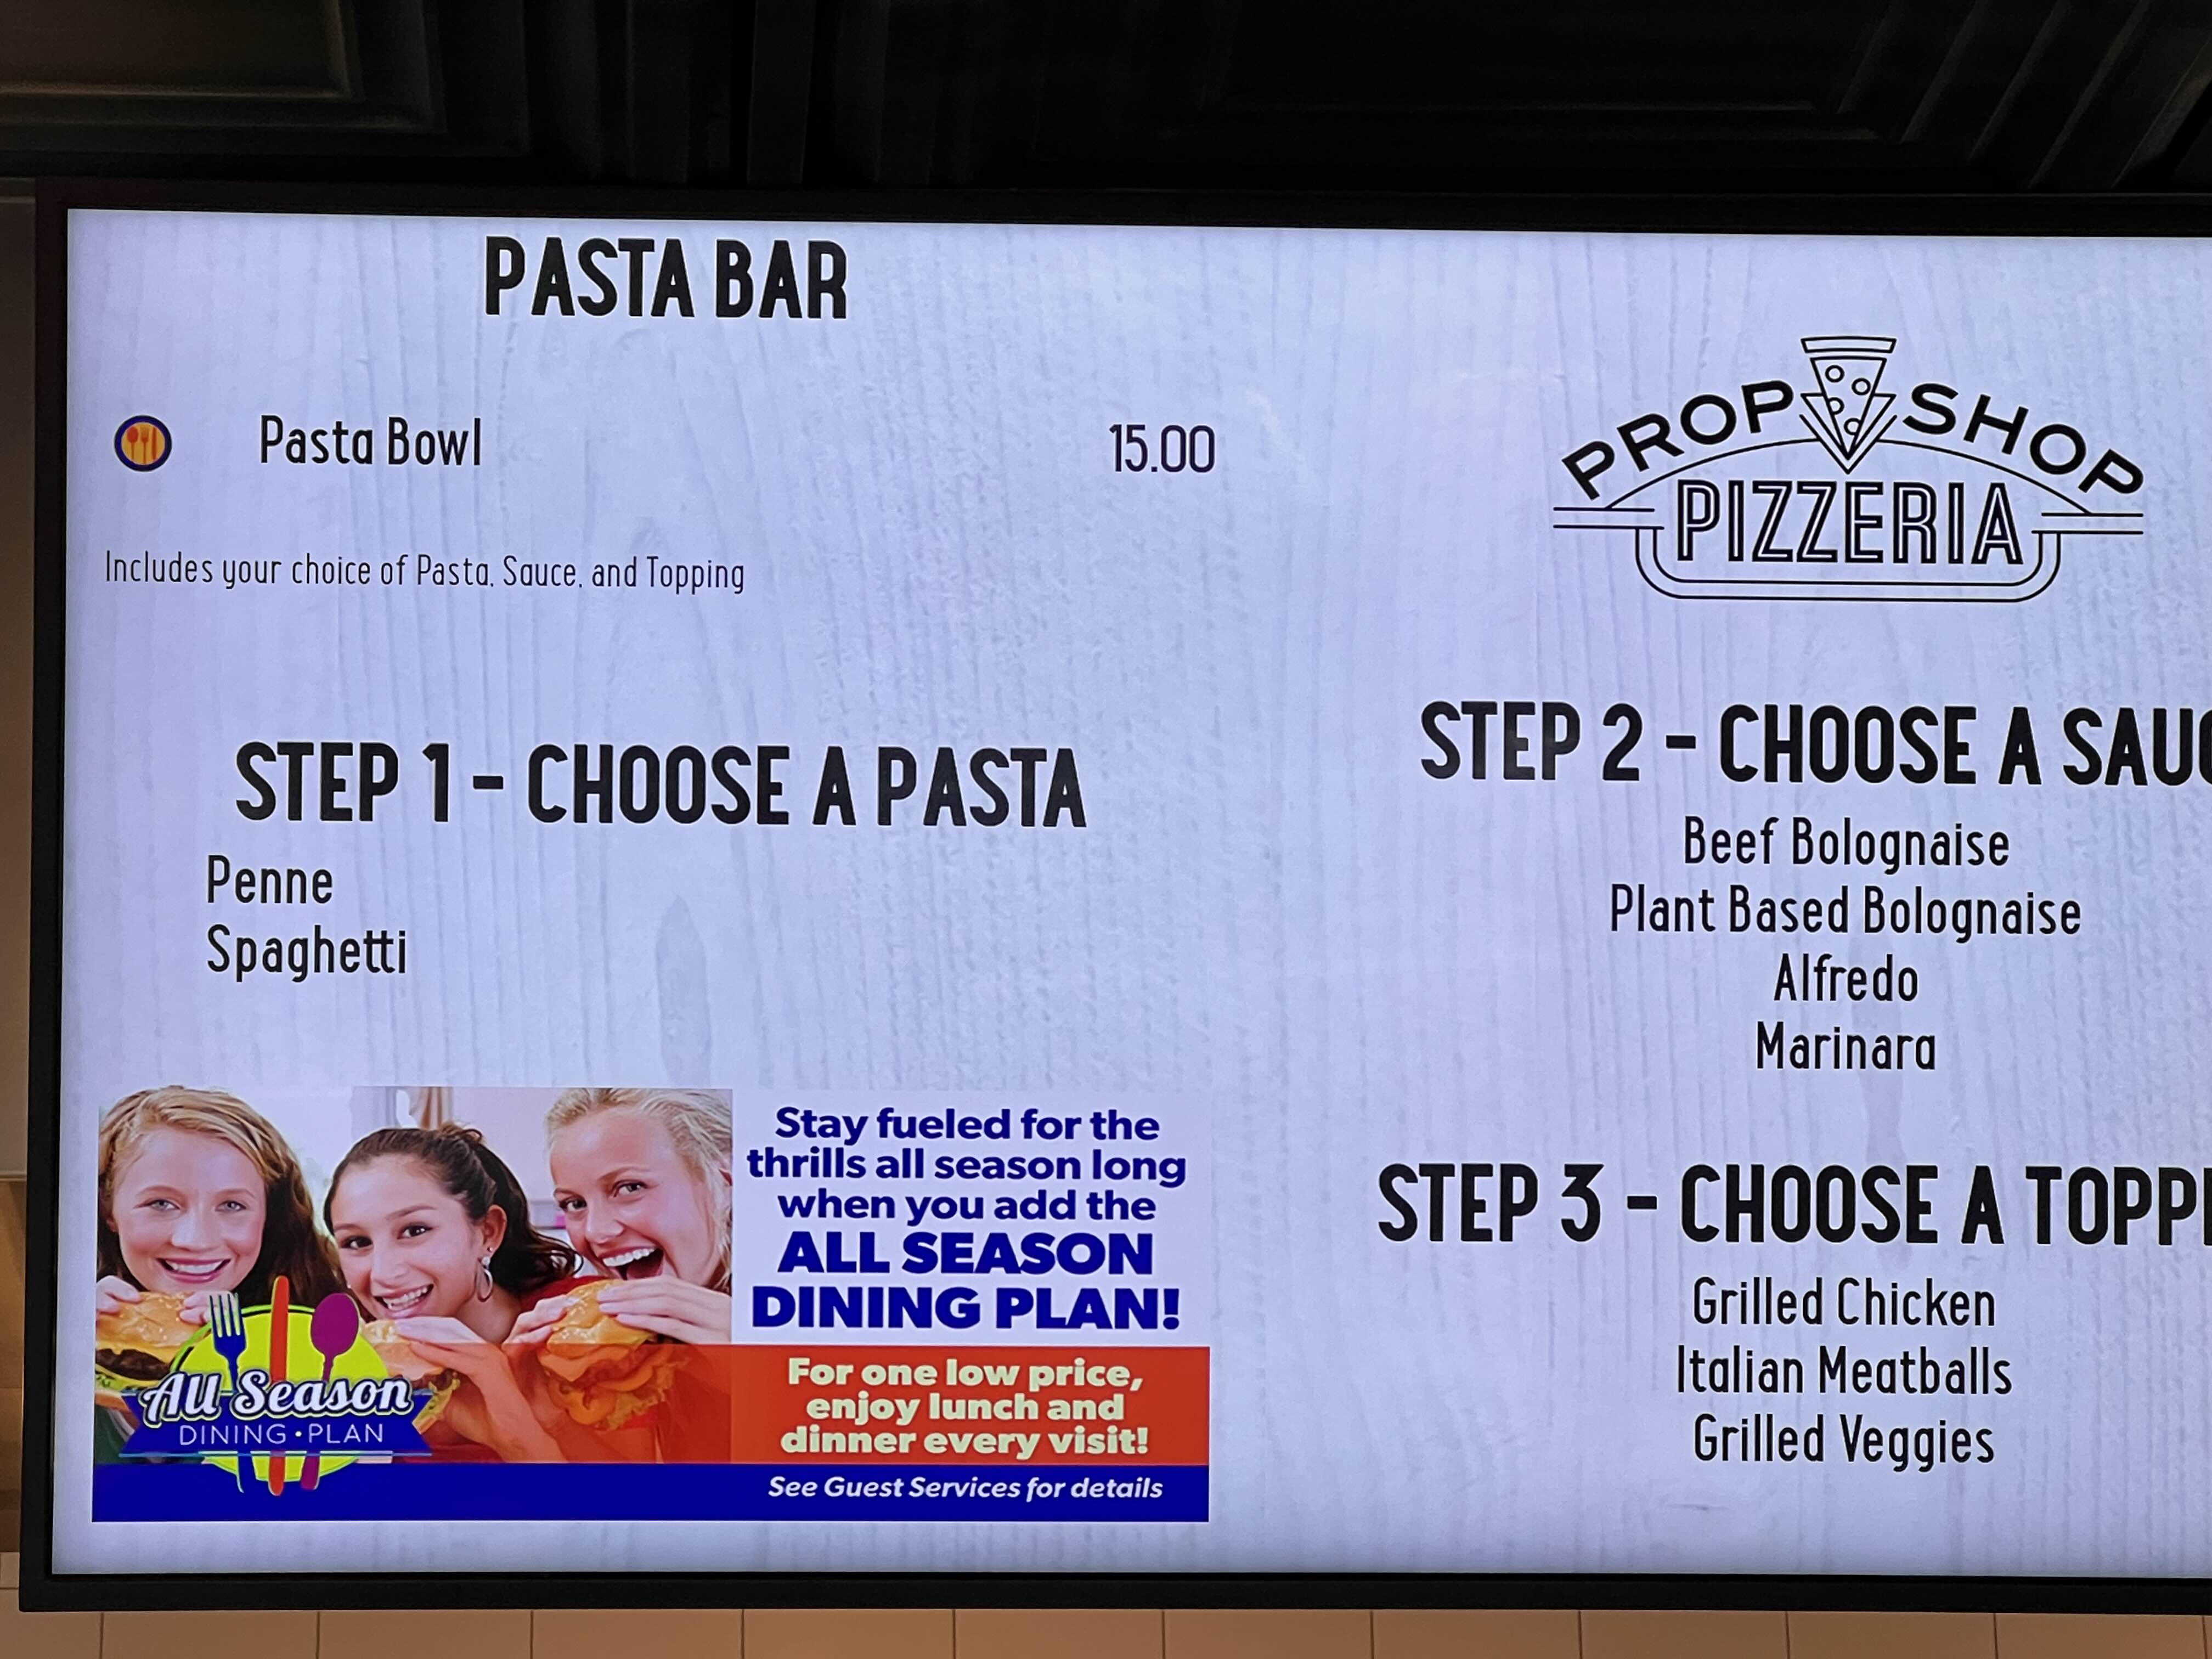 prop shop pizzeria 파스타 메뉴판입니다.